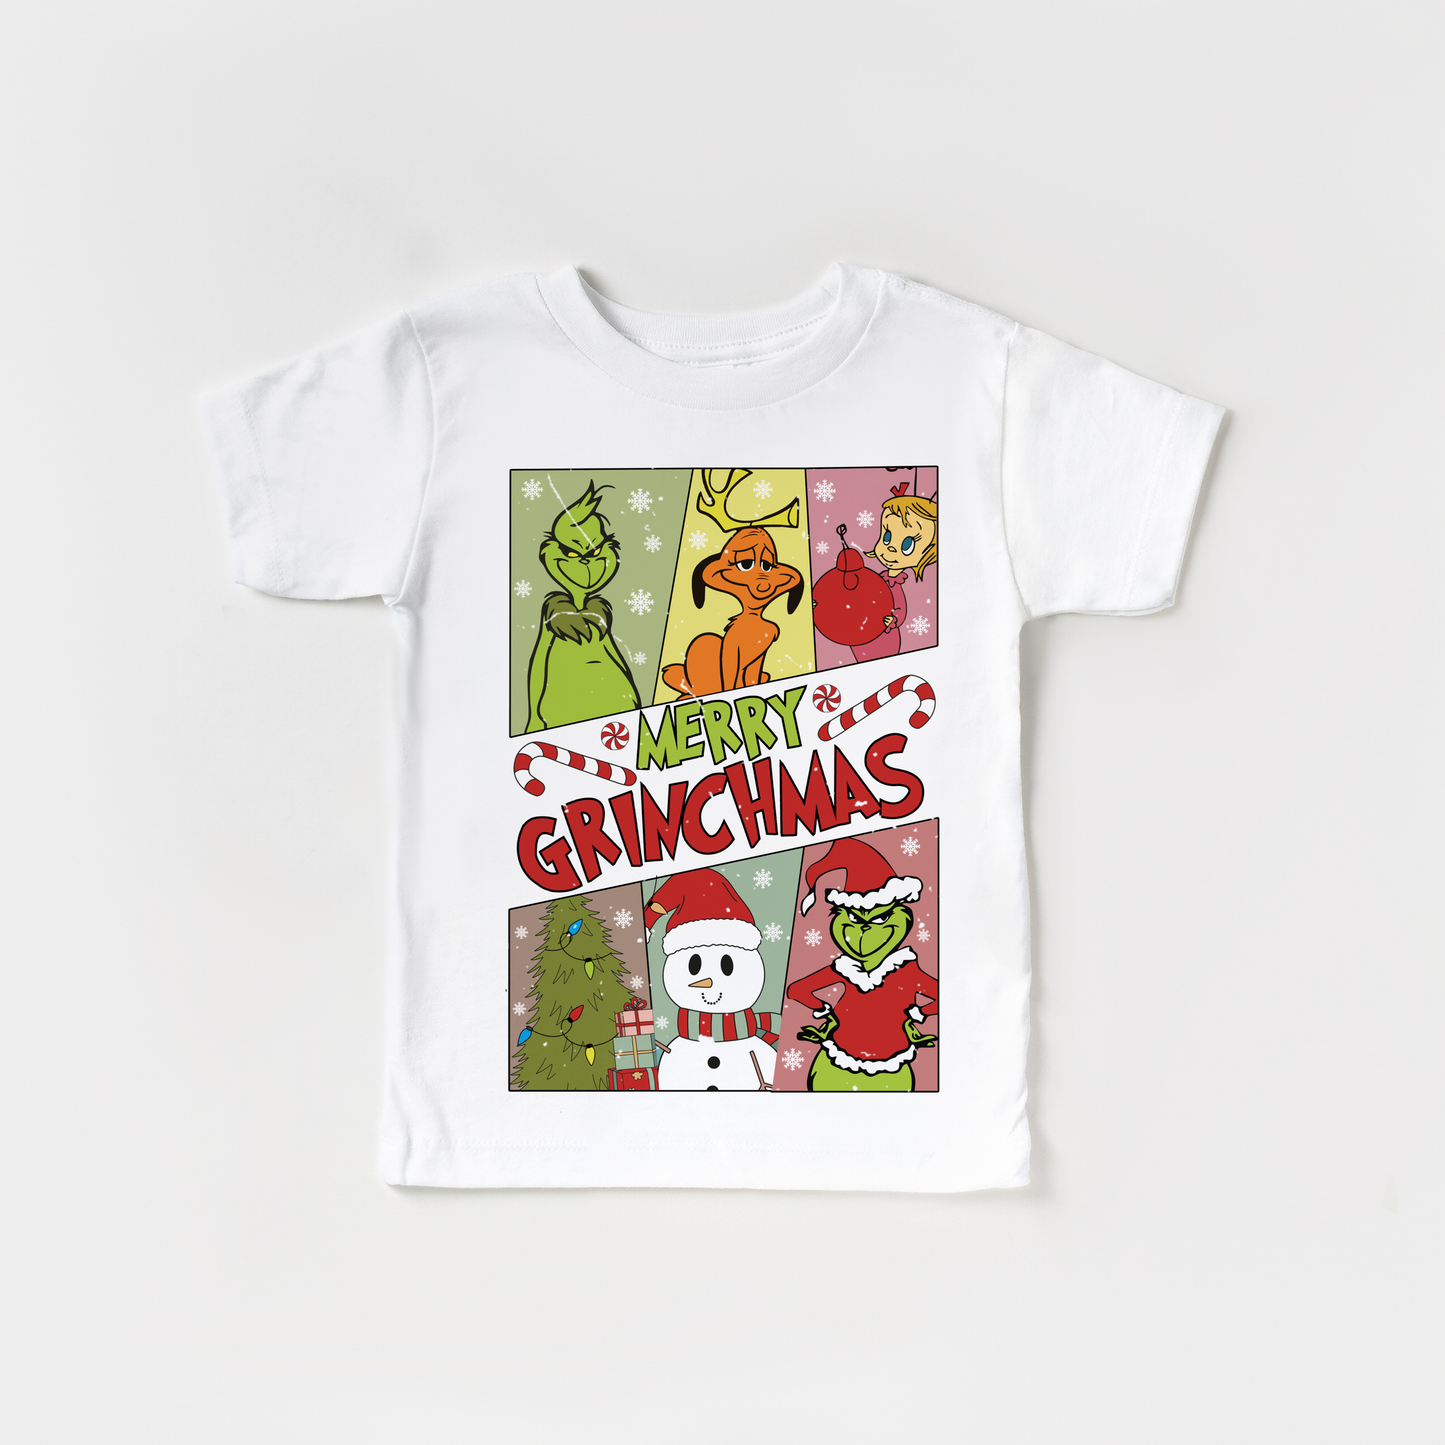 Merry Grinchmas kids t shirt